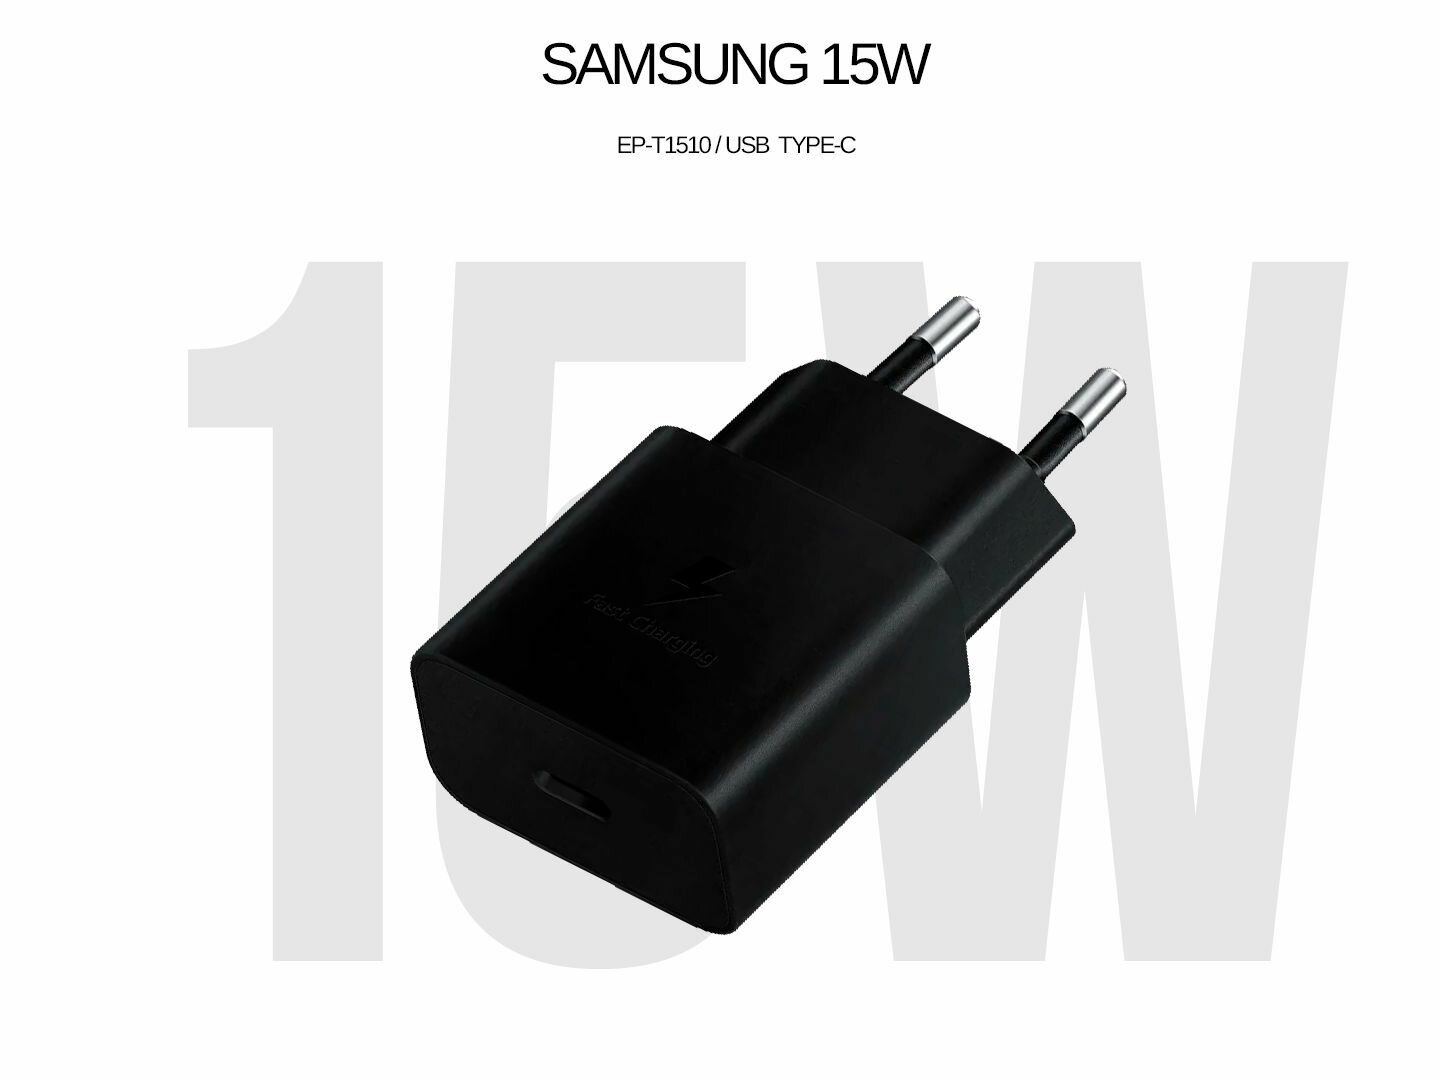 Сетевой адаптер для Samsung Ep-T1510 быстрая зарядка (adaptive fast charging) USB Type-C 15W